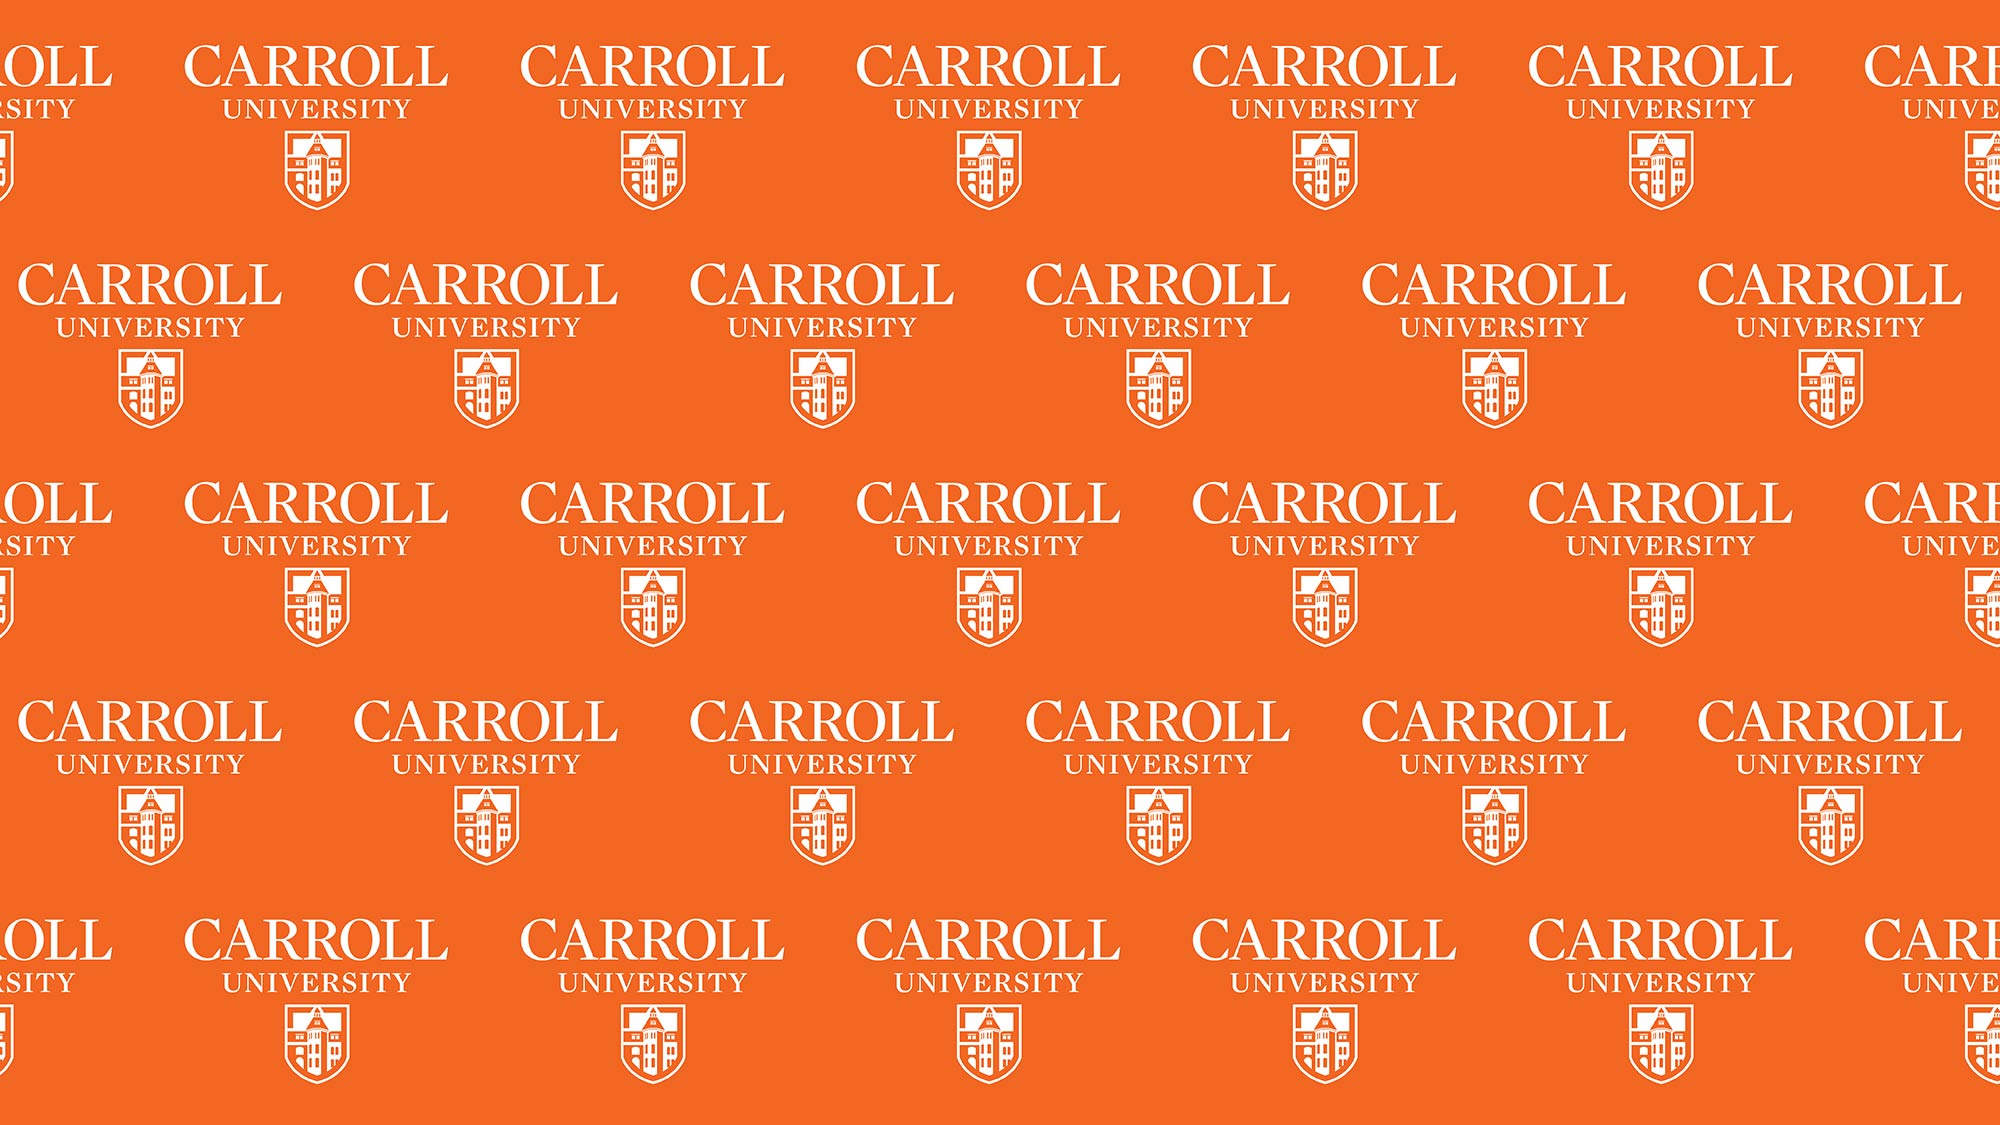 carroll university logo in orange